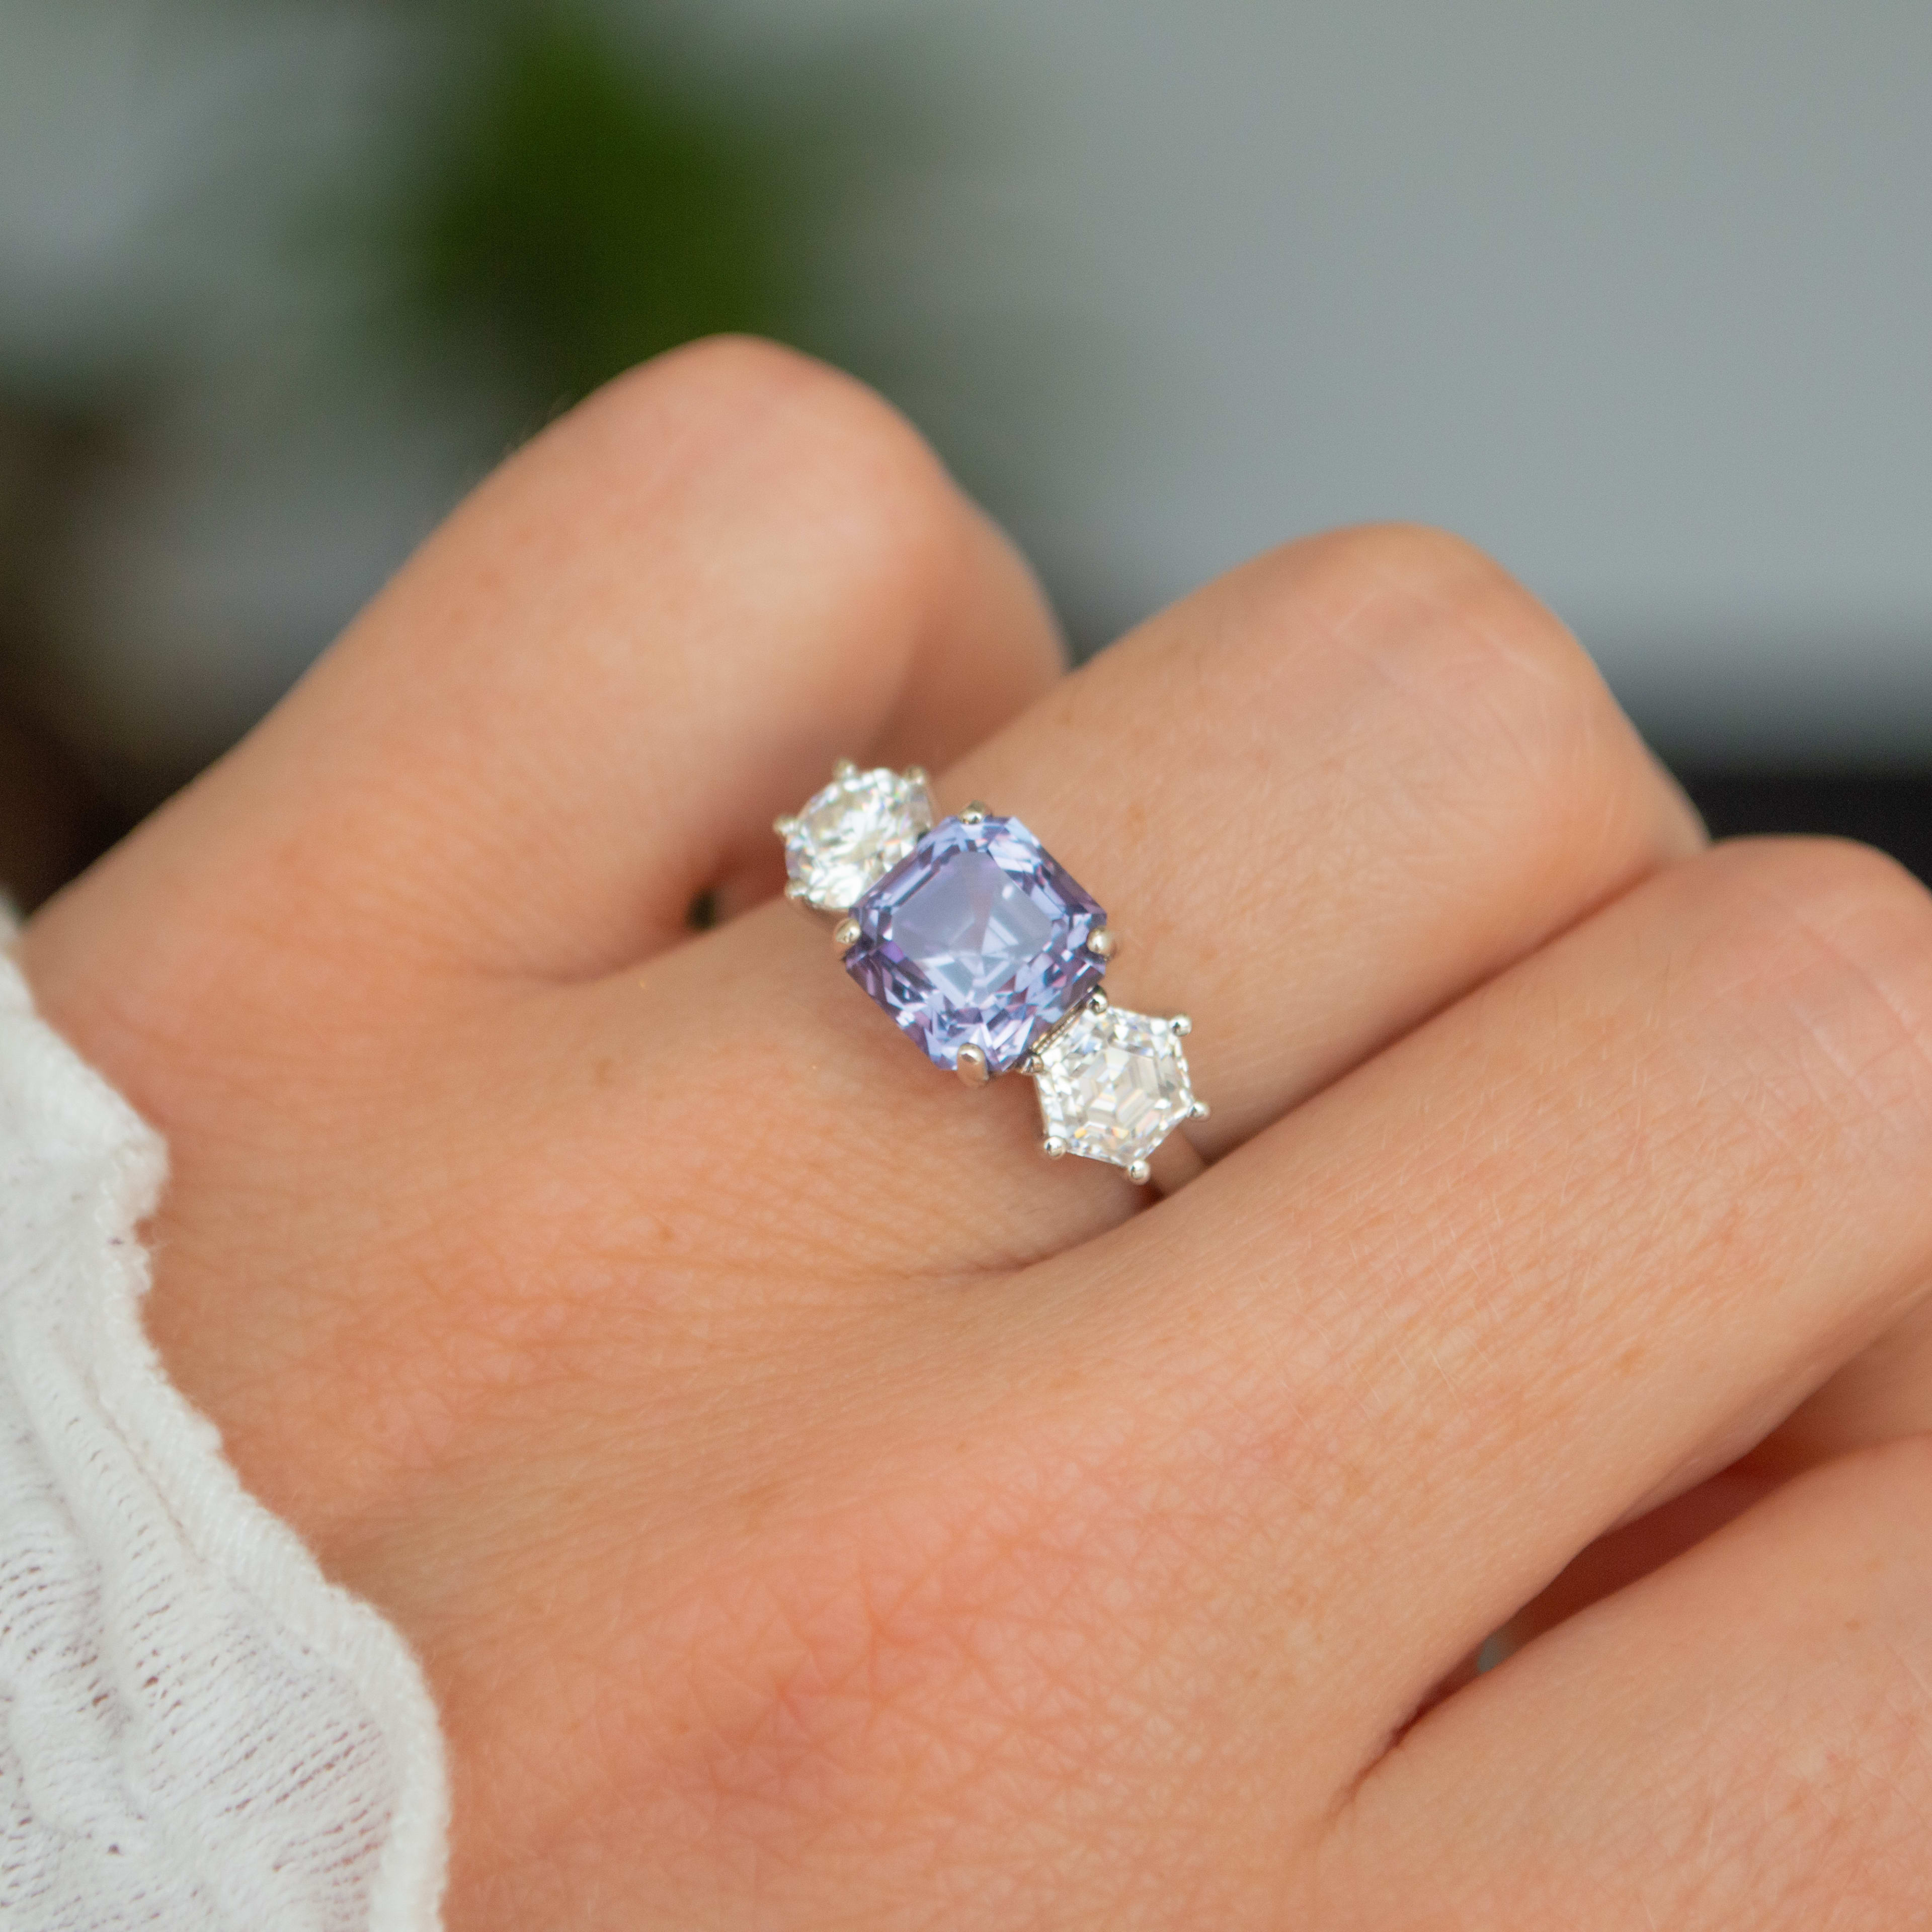 1.5 carat equivalent Cushion cut translucent lilac-blue sapphire with 1 carat accenting hexagonal cut lab grown diamonds